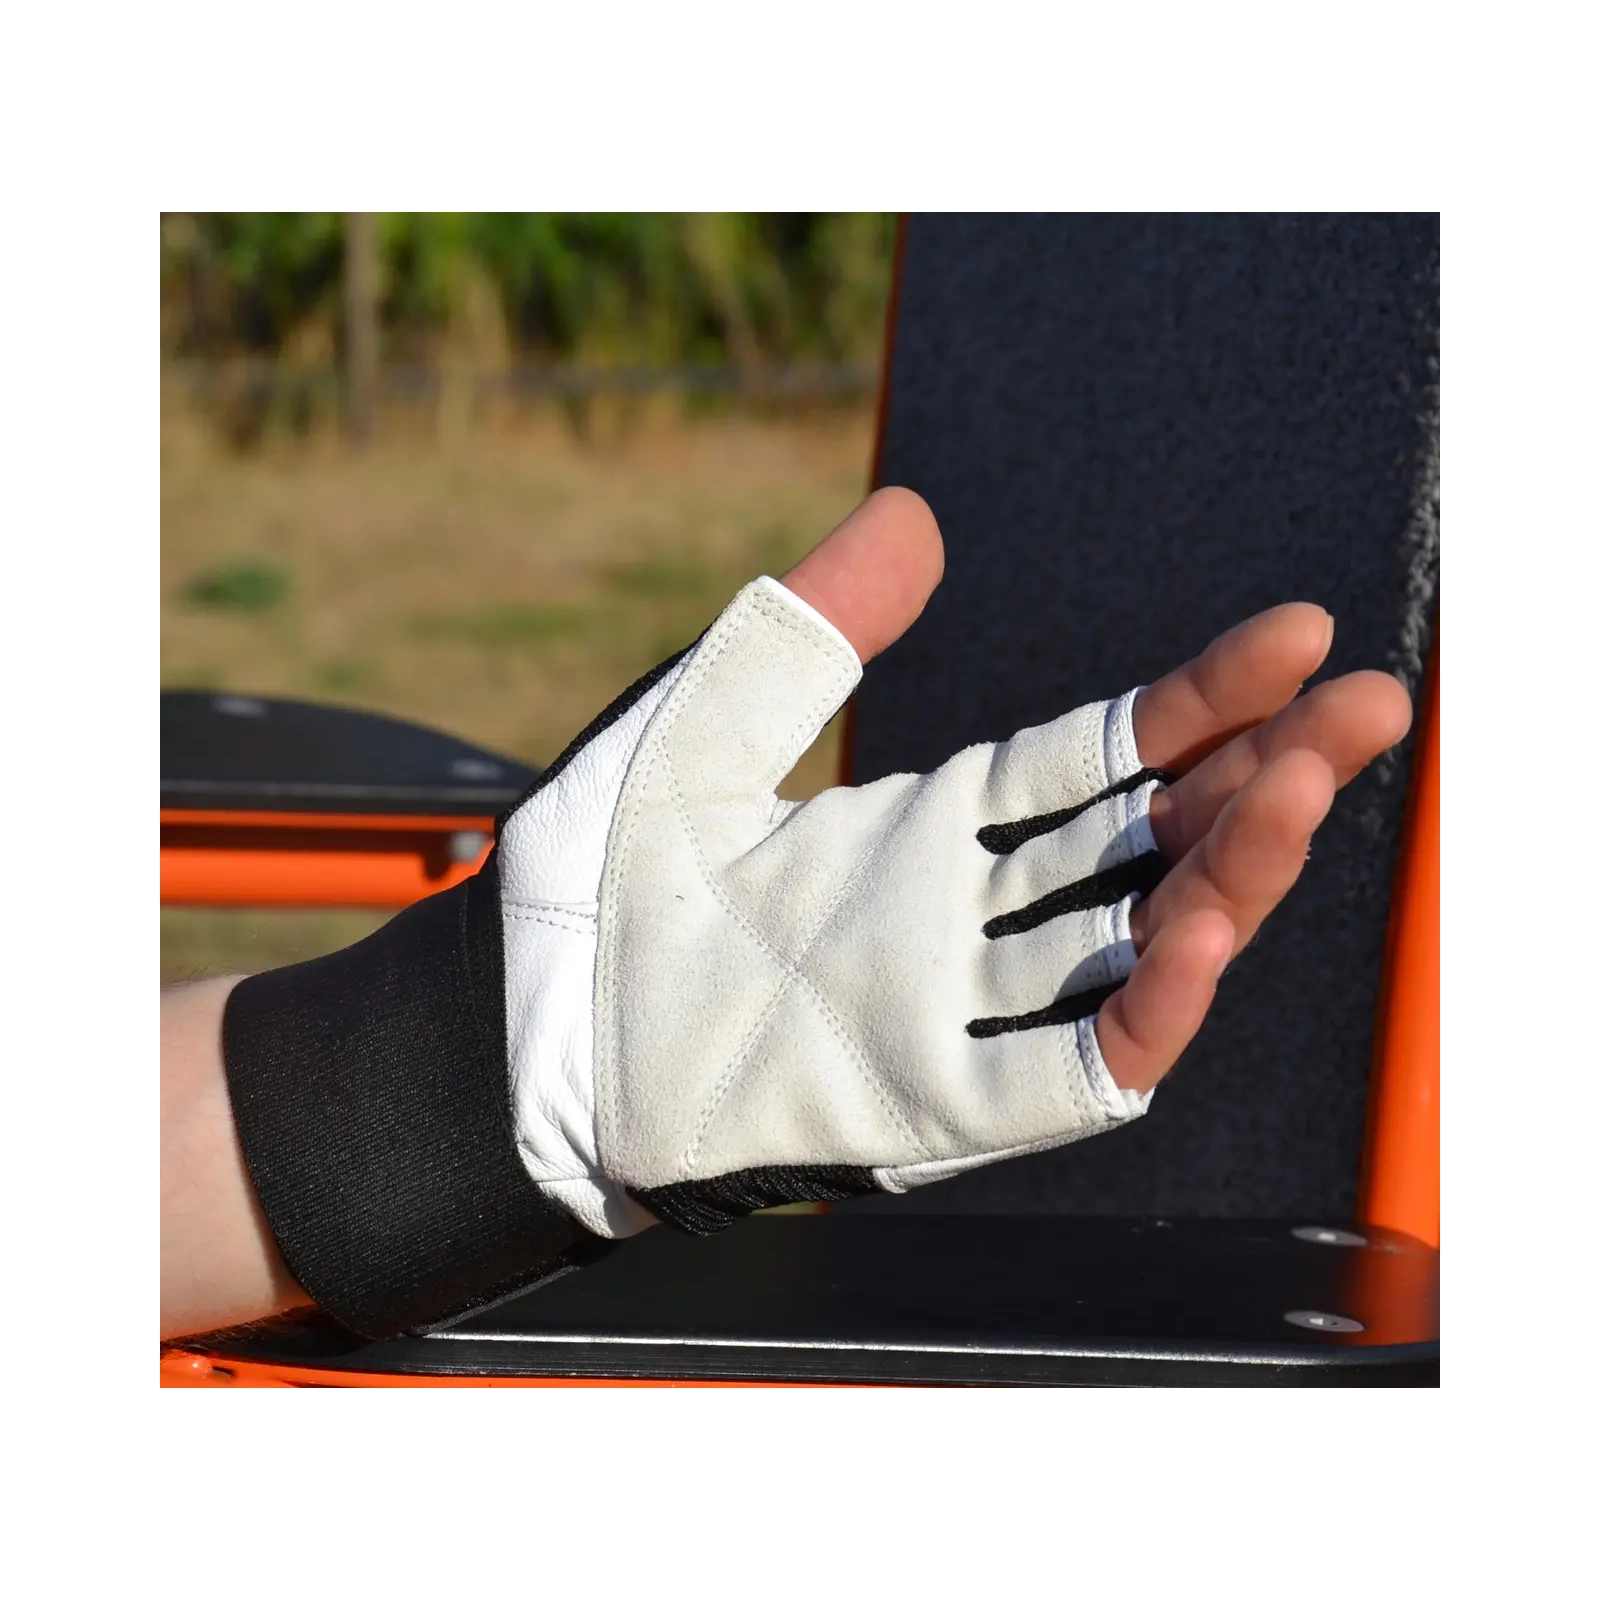 Перчатки для фитнеса MadMax MFG-269 Professional White S (MFG-269-White_S) изображение 3